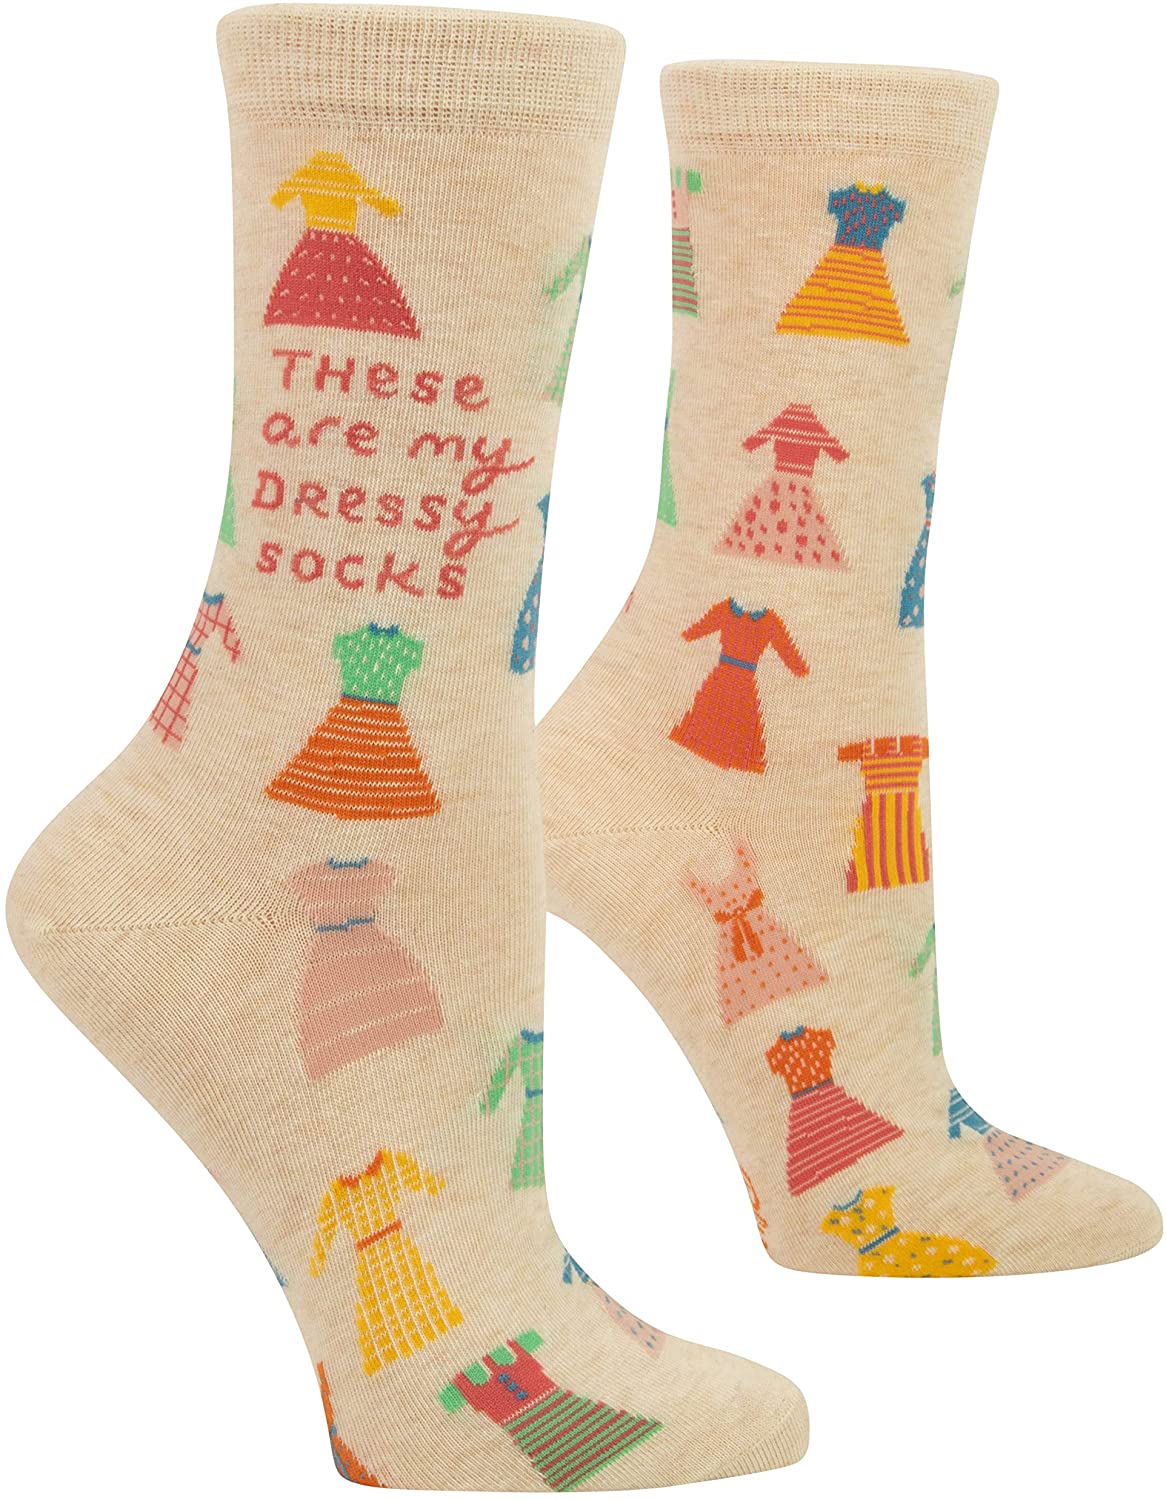 Sokken Vrouwen: These are my dressy socks